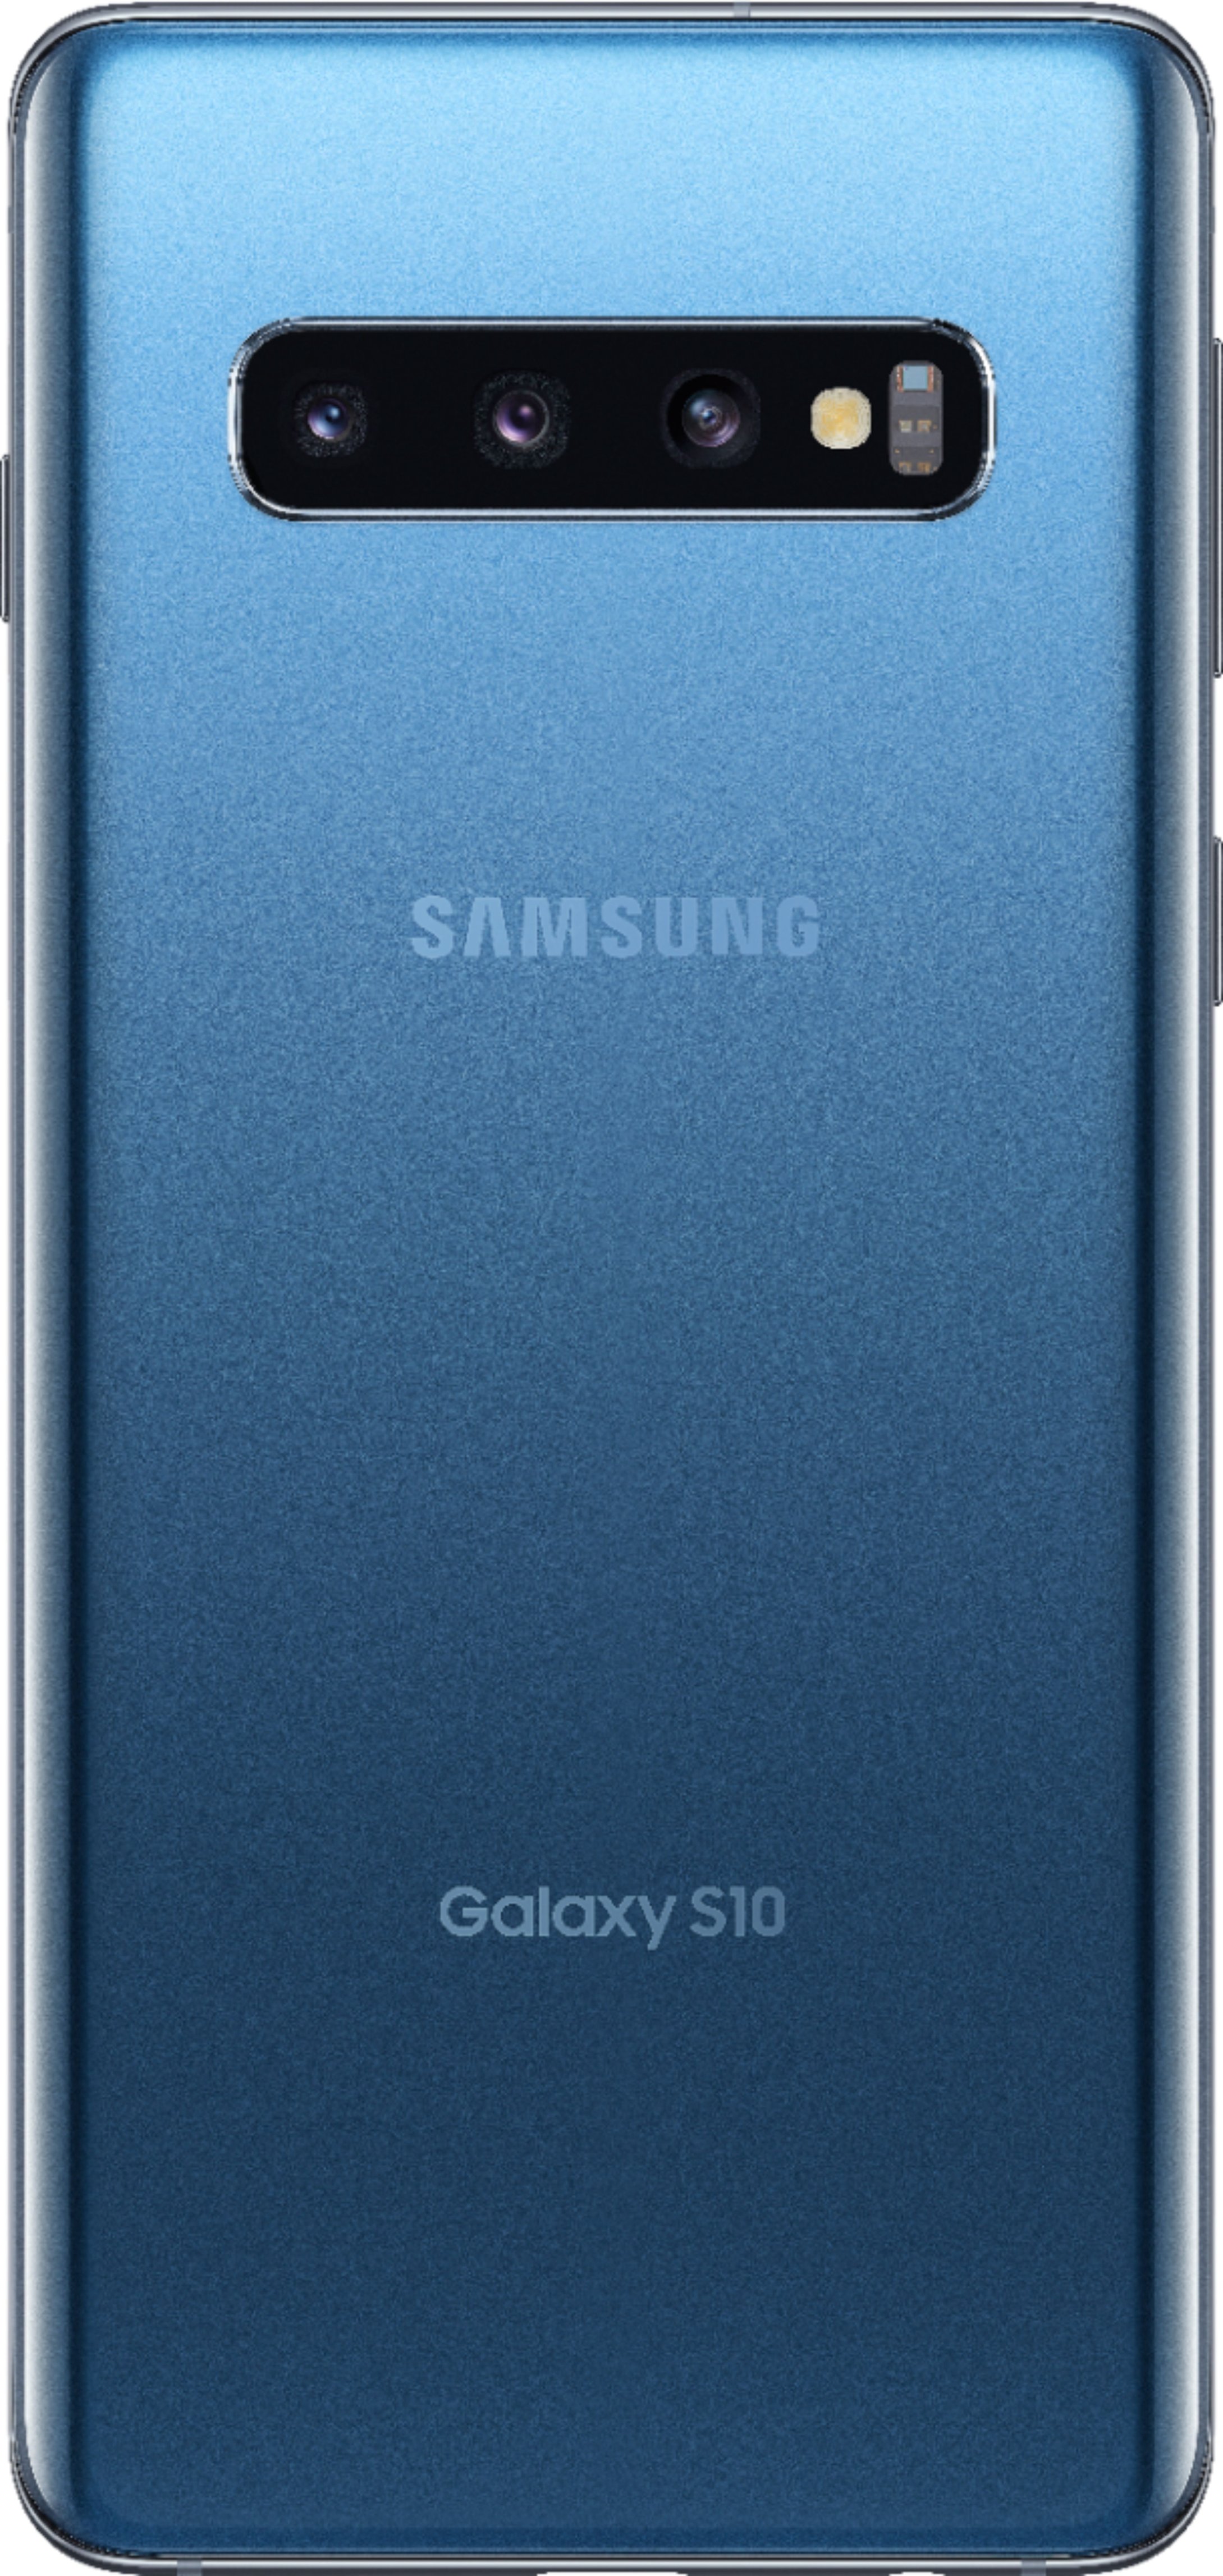 Back View: Verizon Wireless Samsung Galaxy S10 512GB, Prism Blue